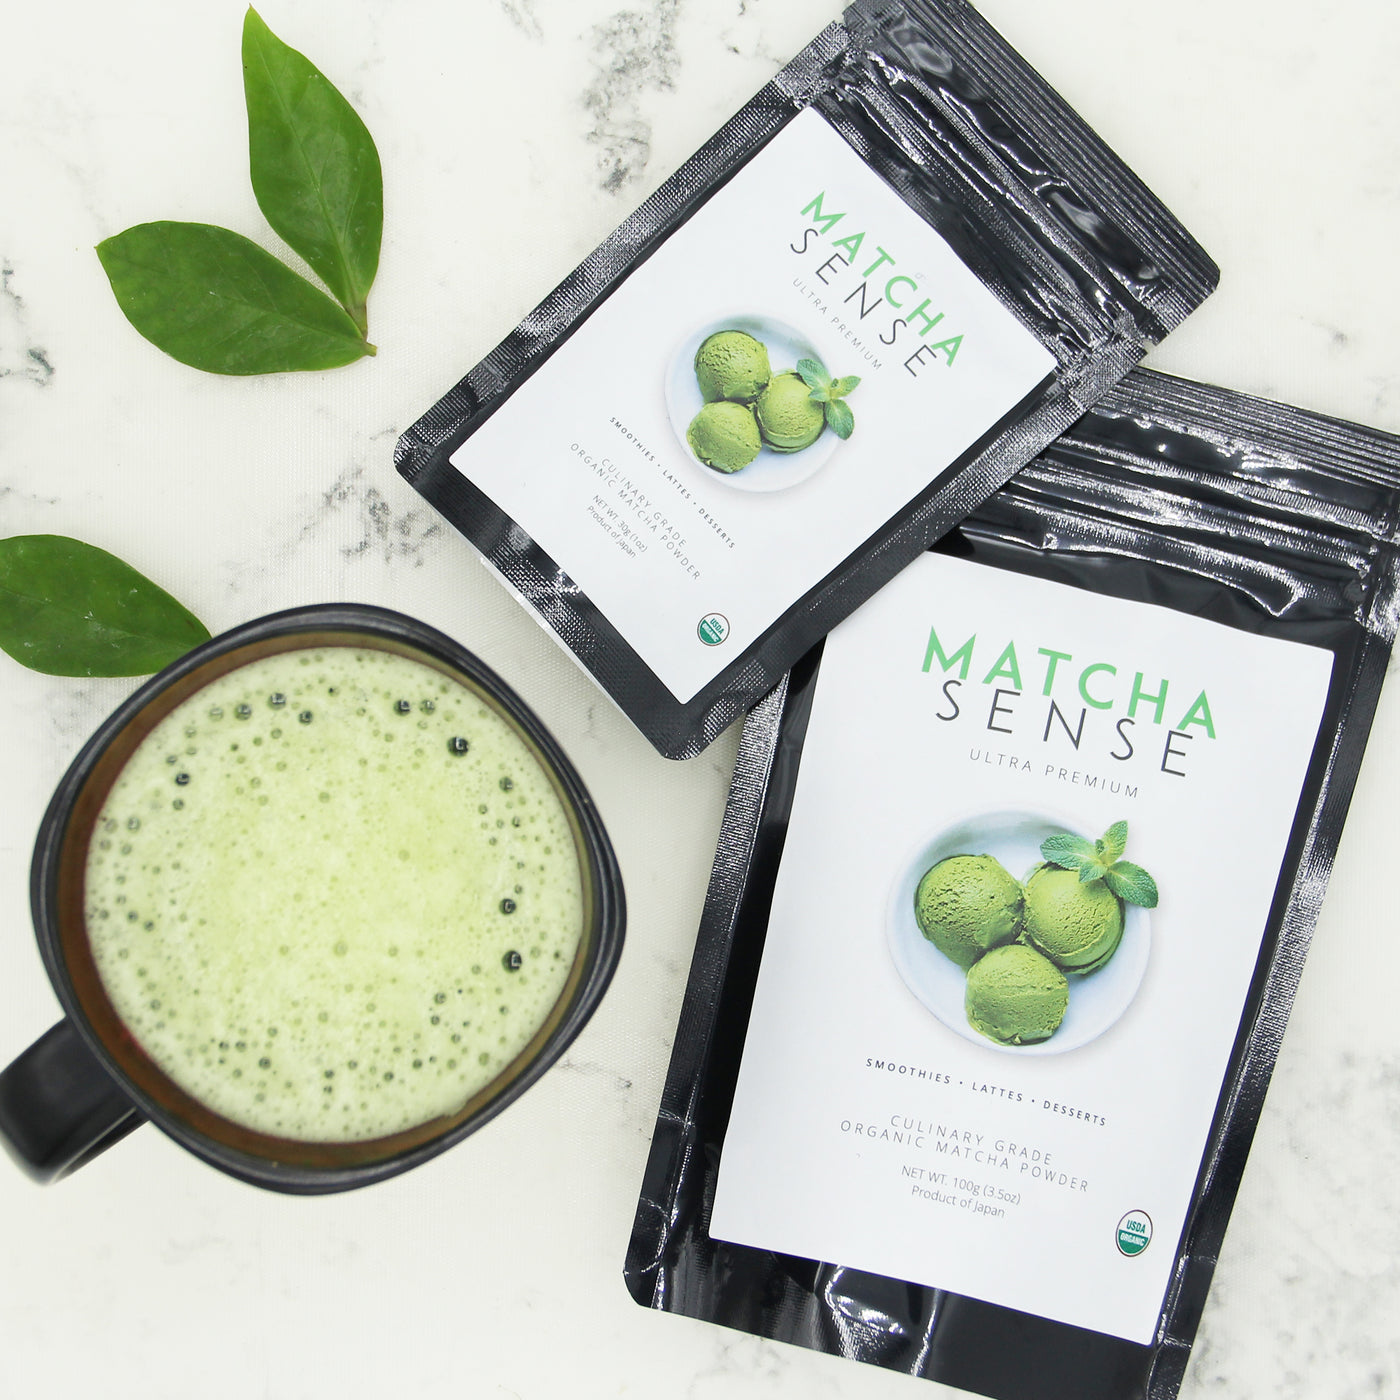 Premium Culinary Grade Matcha Green Tea Powder